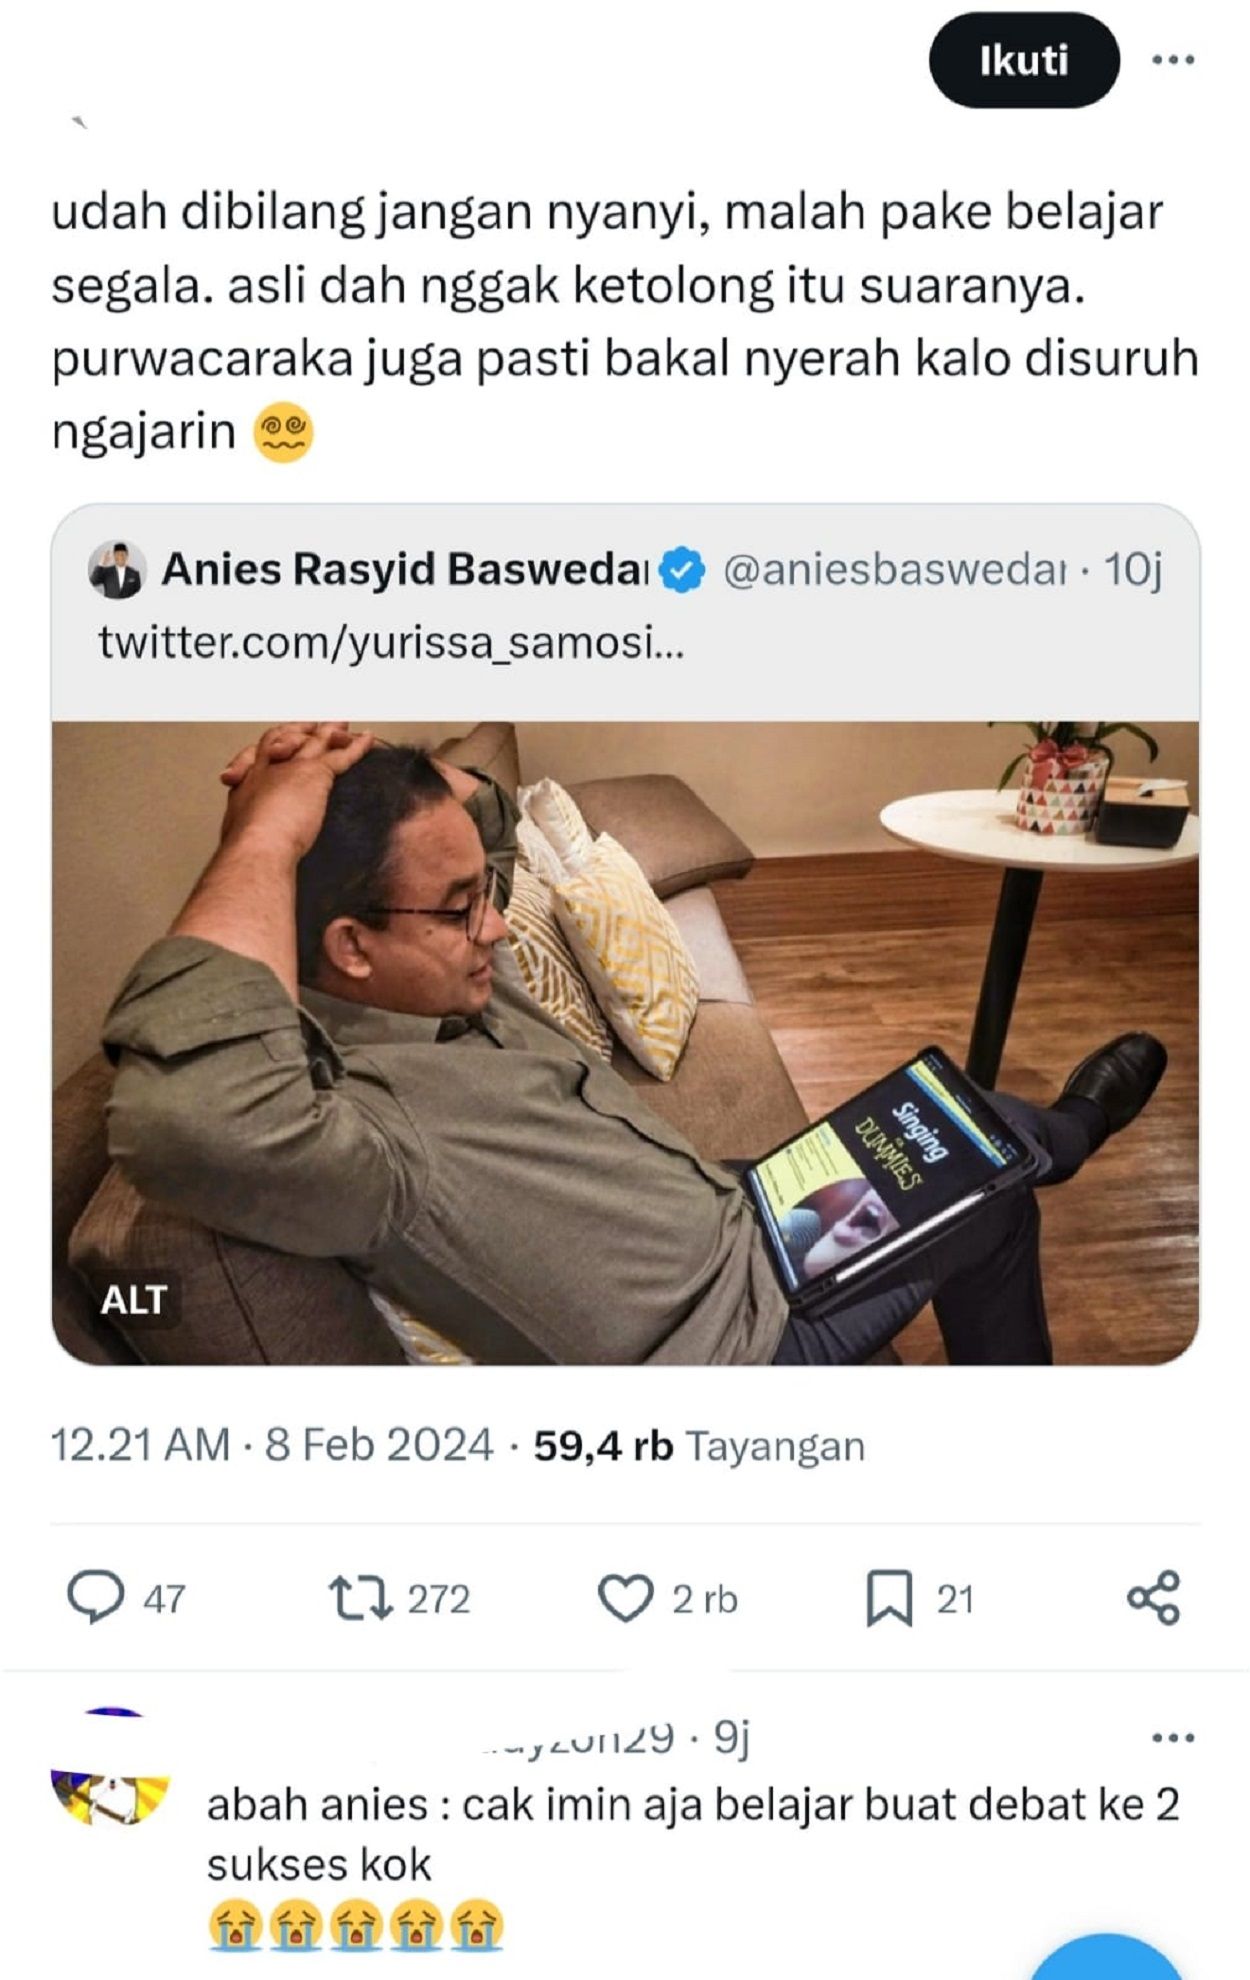  Komen Lucu  Netizen Twitter Moment Anies Baswedan  di Roasting pendukungya Sendiri